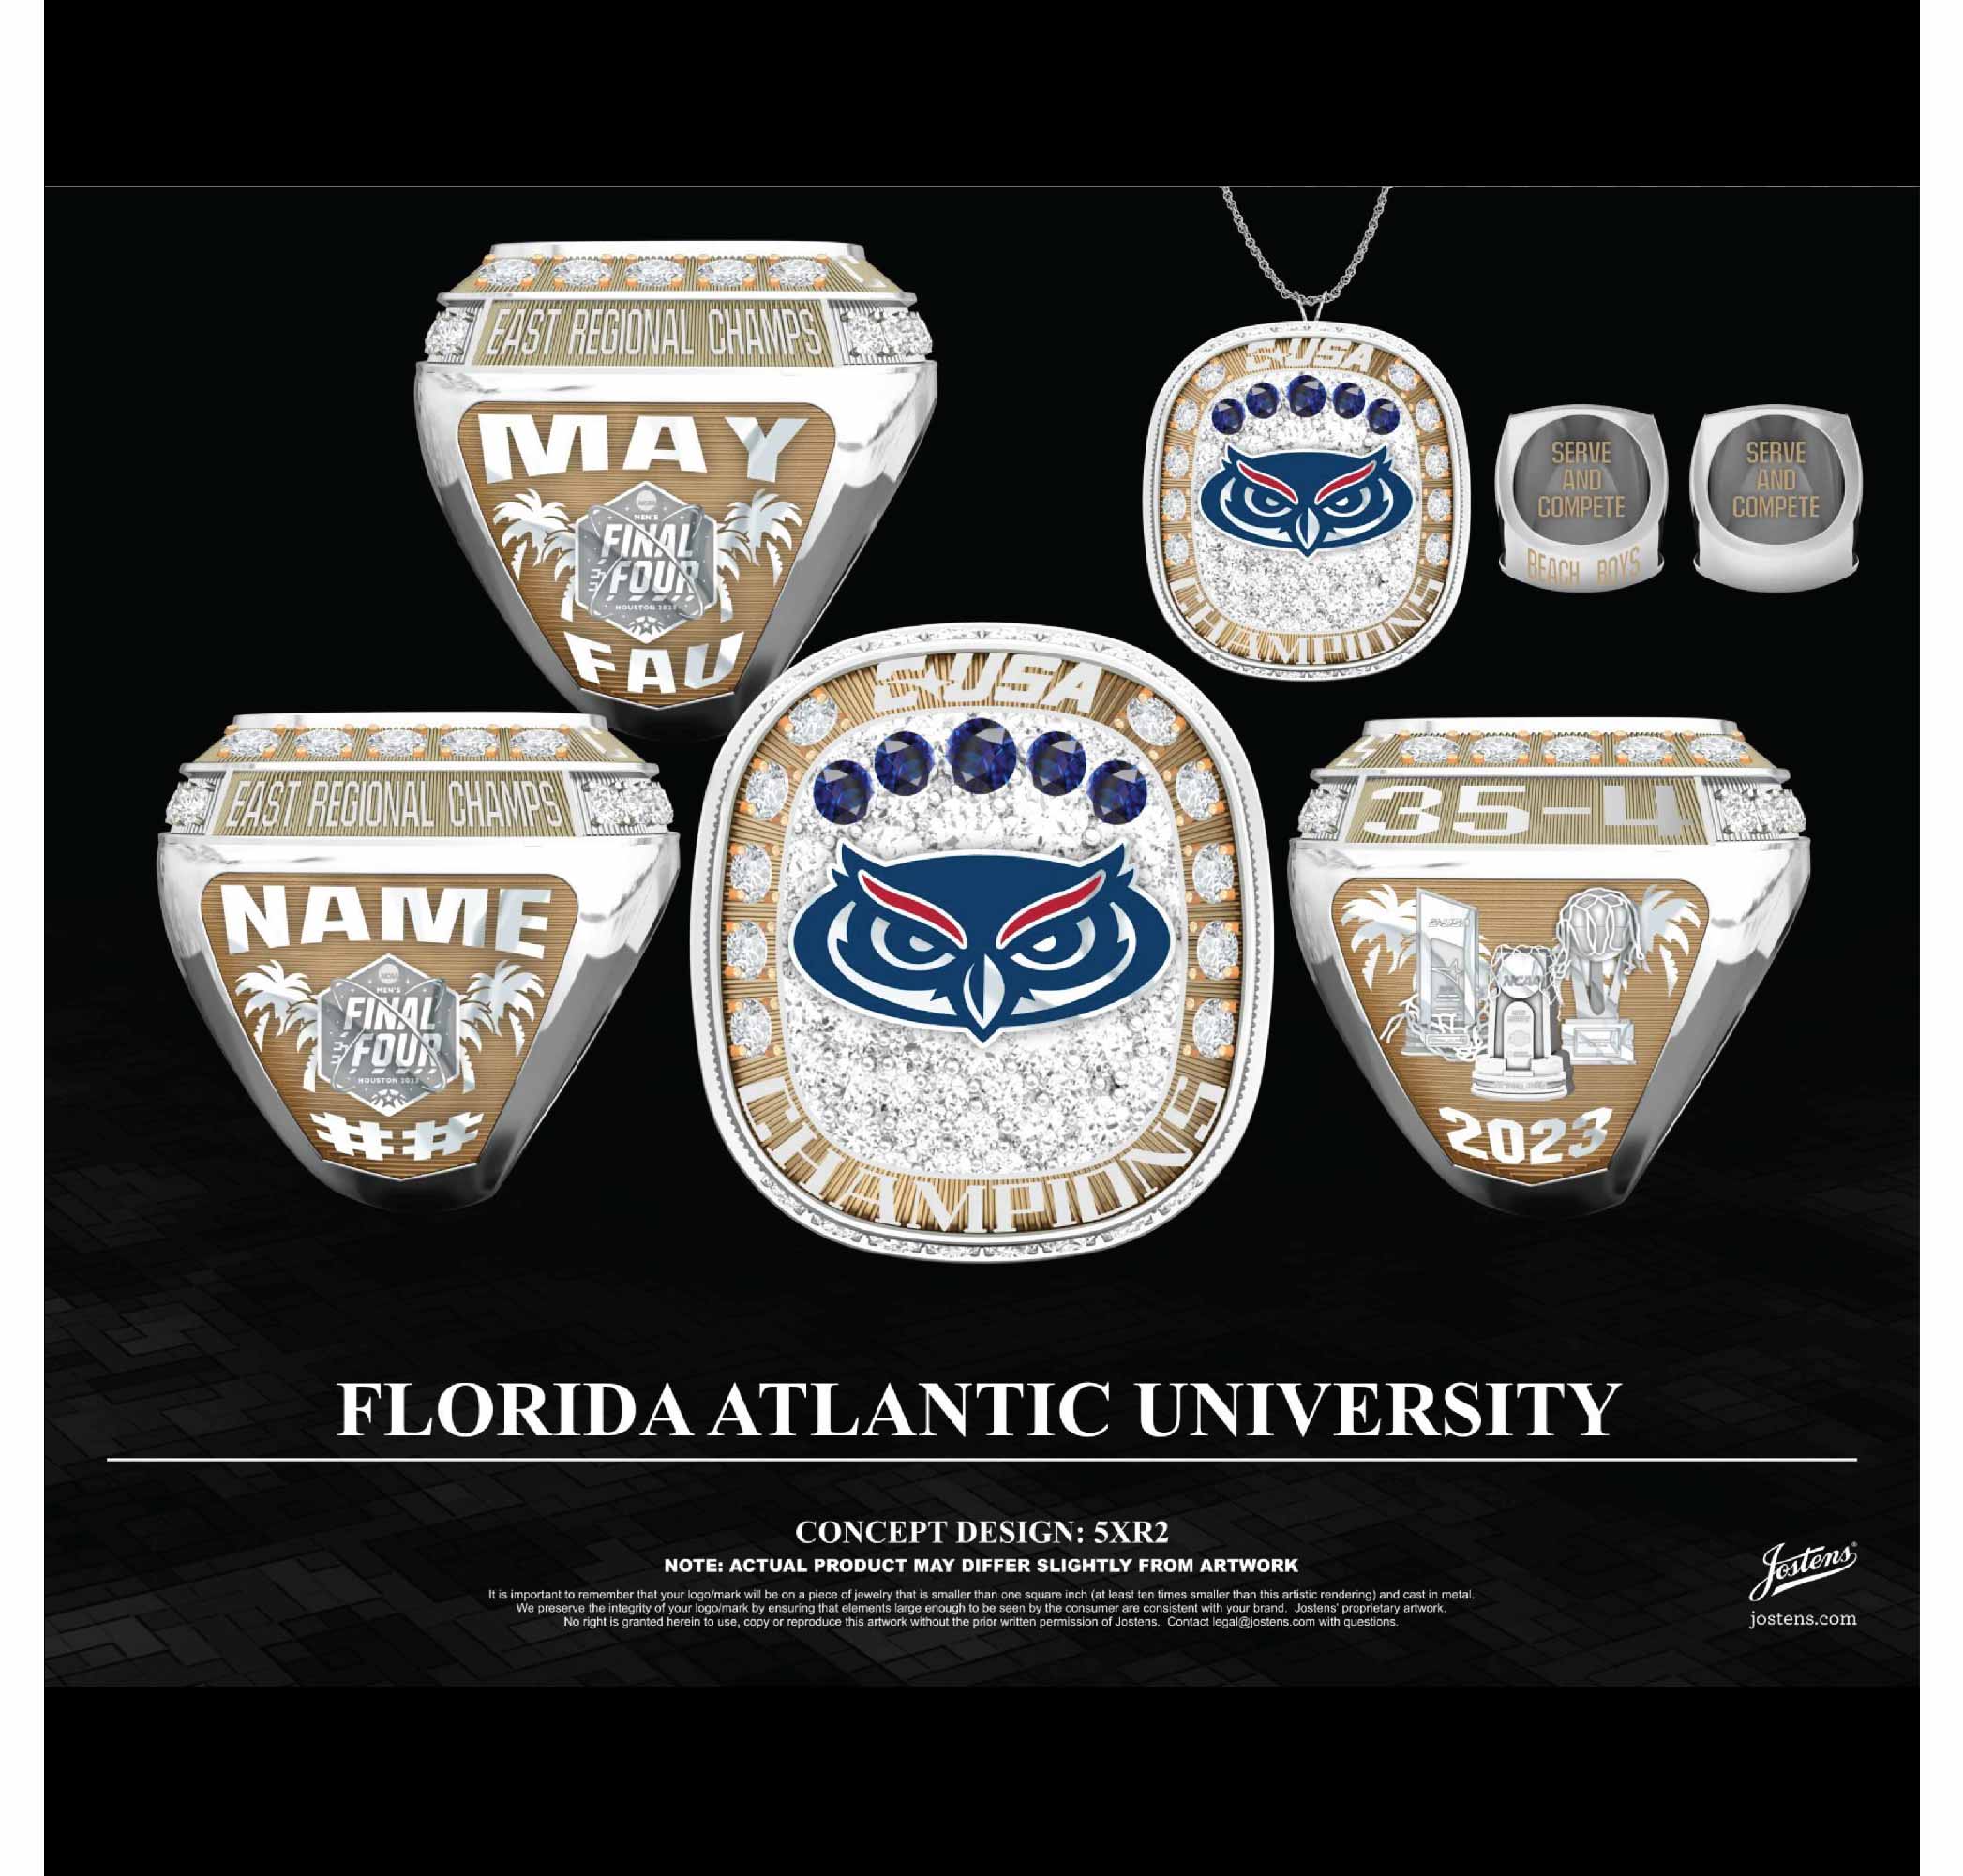 Florida Atlantic University Men's Basketball 2023 C-USA Championship Ring